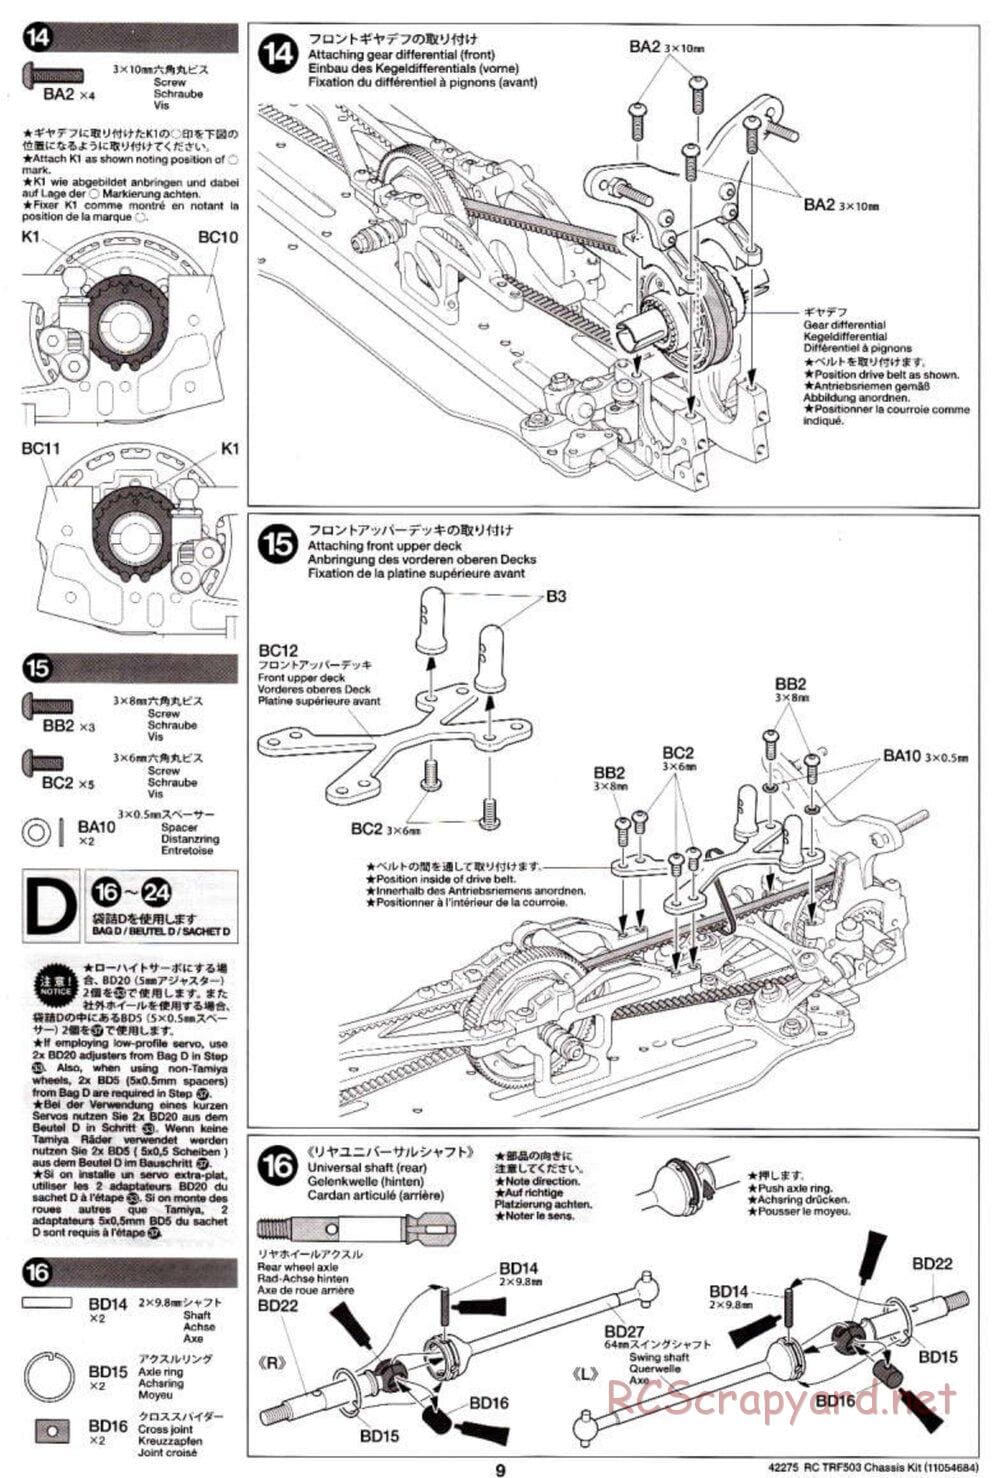 Tamiya - TRF503 Chassis - Manual - Page 9